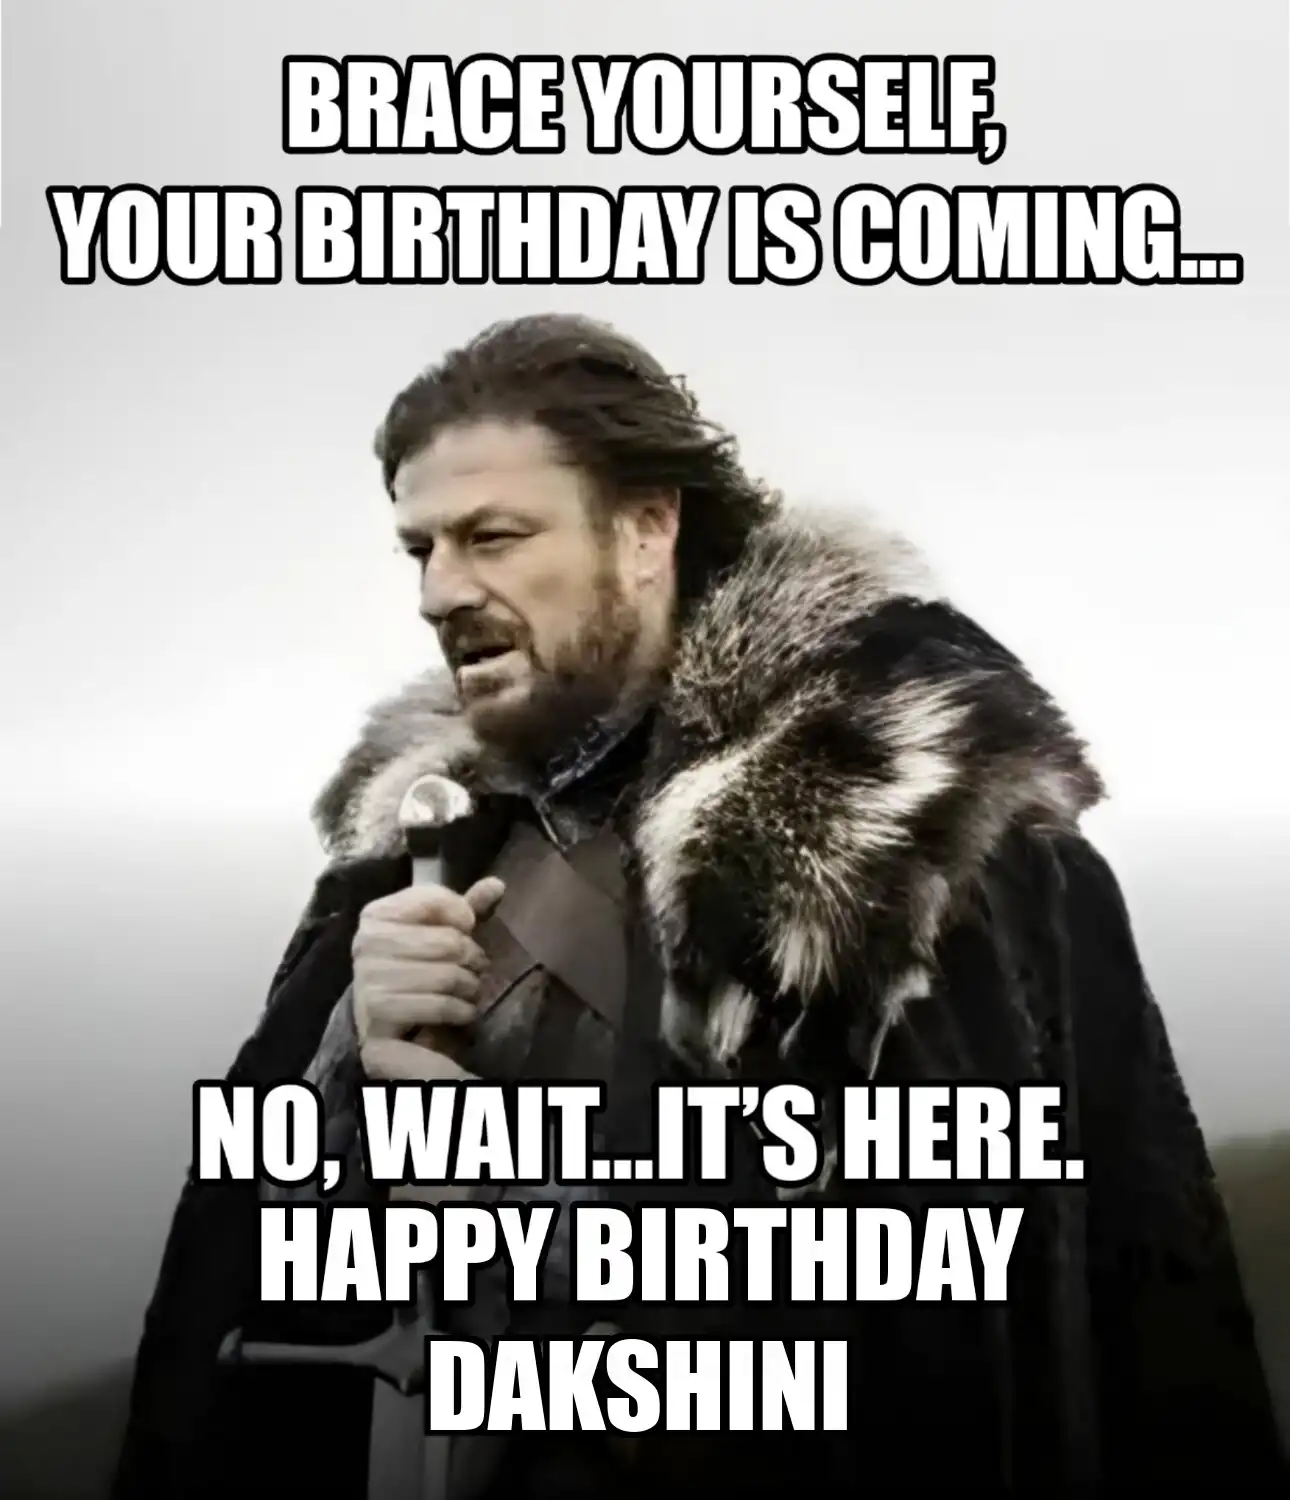 Happy Birthday Dakshini Brace Yourself Your Birthday Is Coming Meme